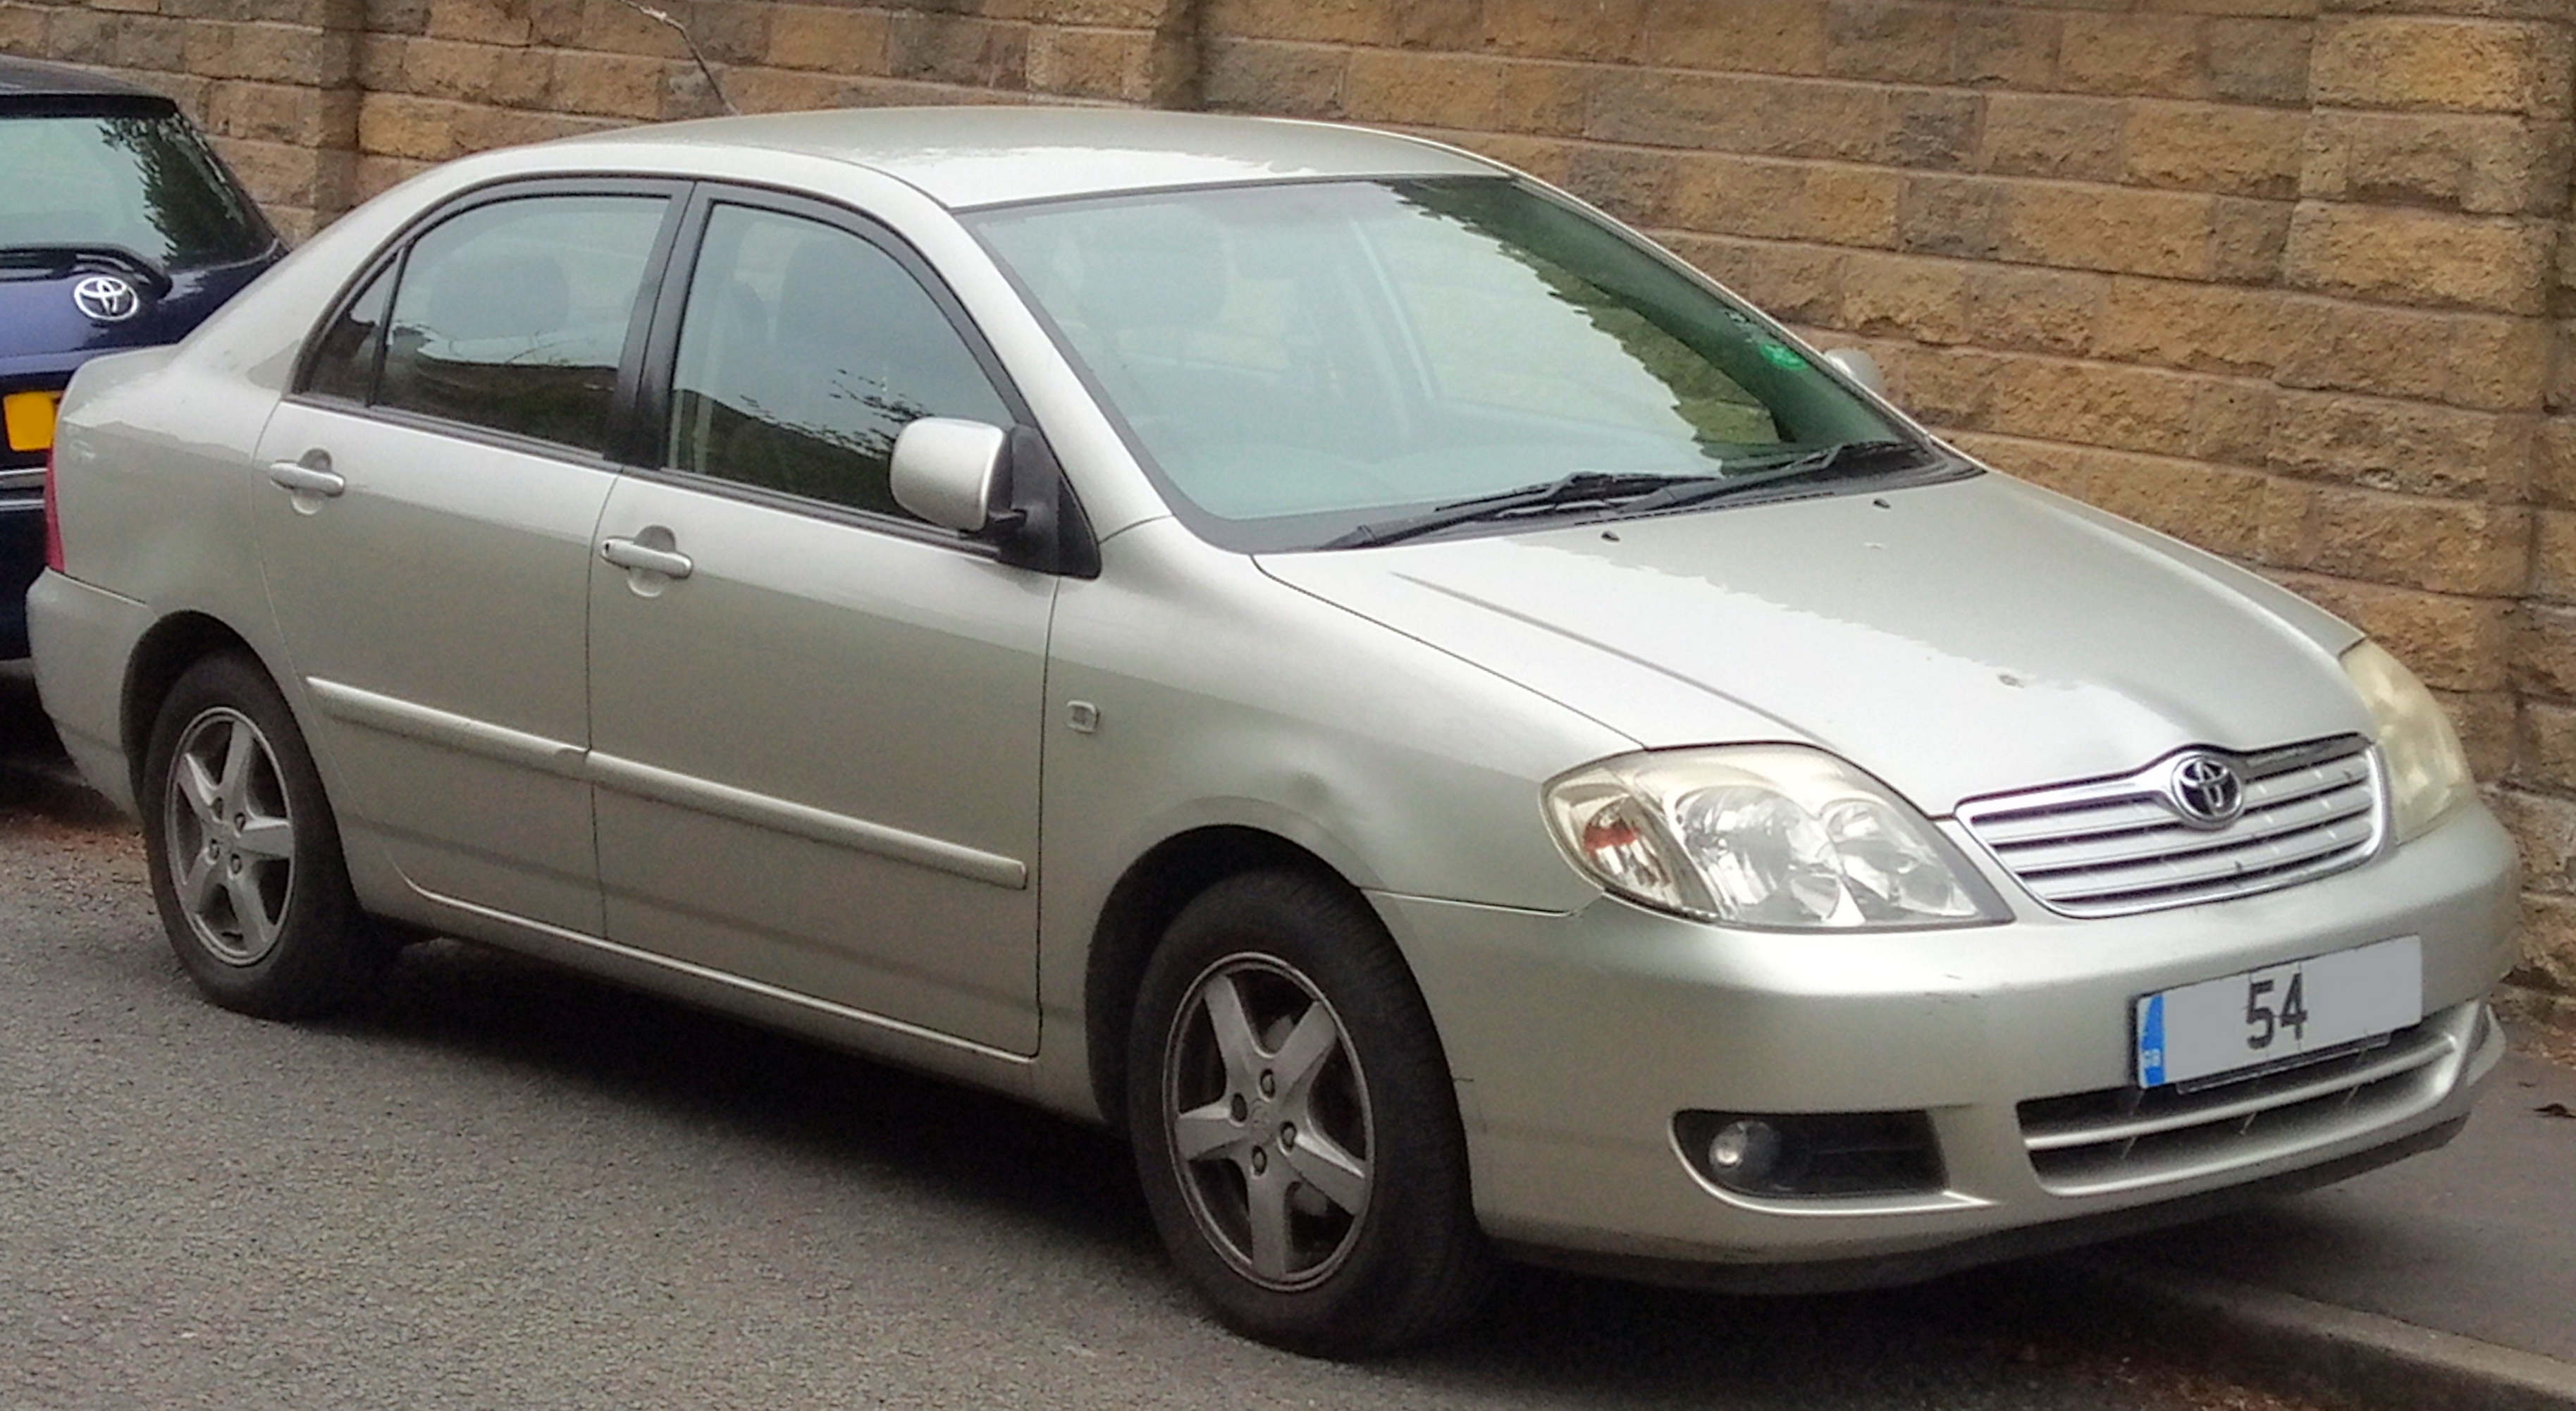 File:2004 Toyota Corolla 1.4VVT-i T3 (Front).jpg - Wikimedia Commons